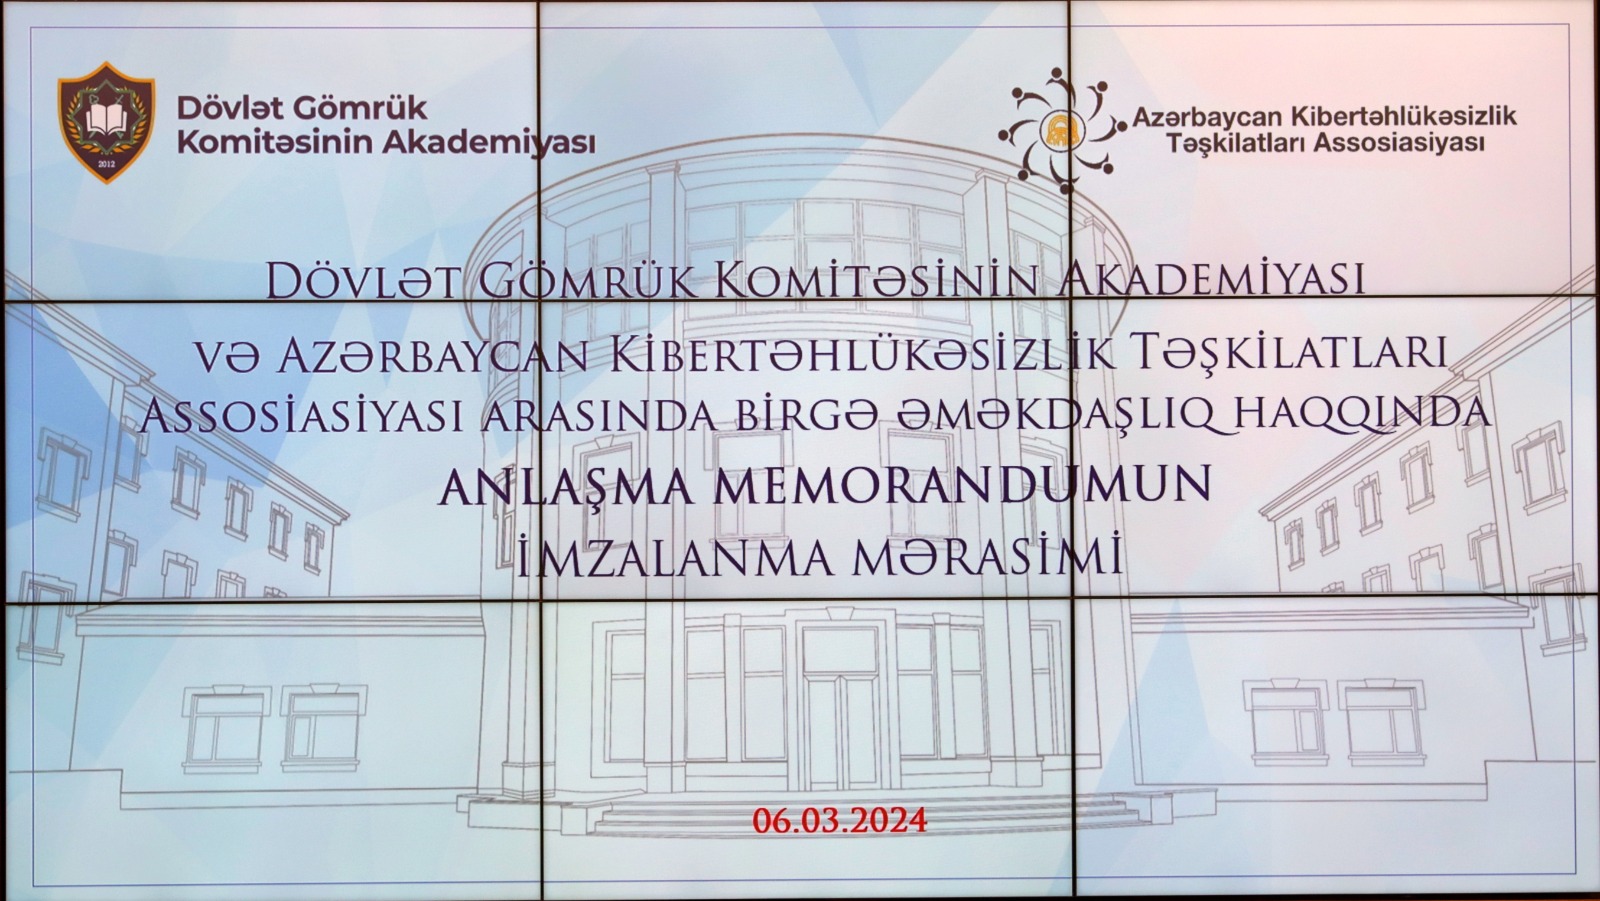 A Memorandum of Understanding was signed between DGKA and AKTA